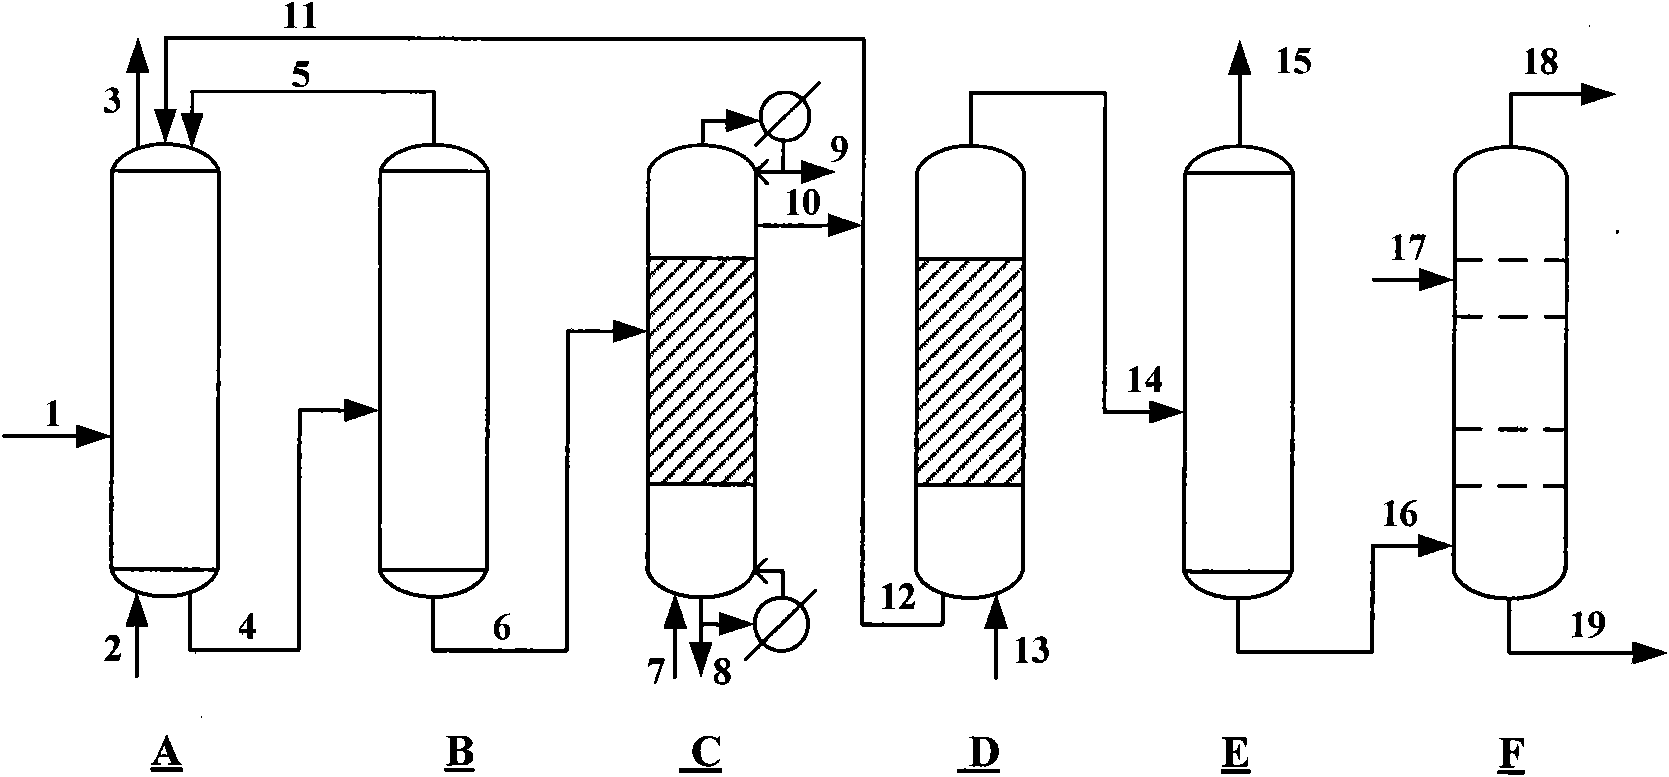 Method for producing caprolactam by methylbenzene